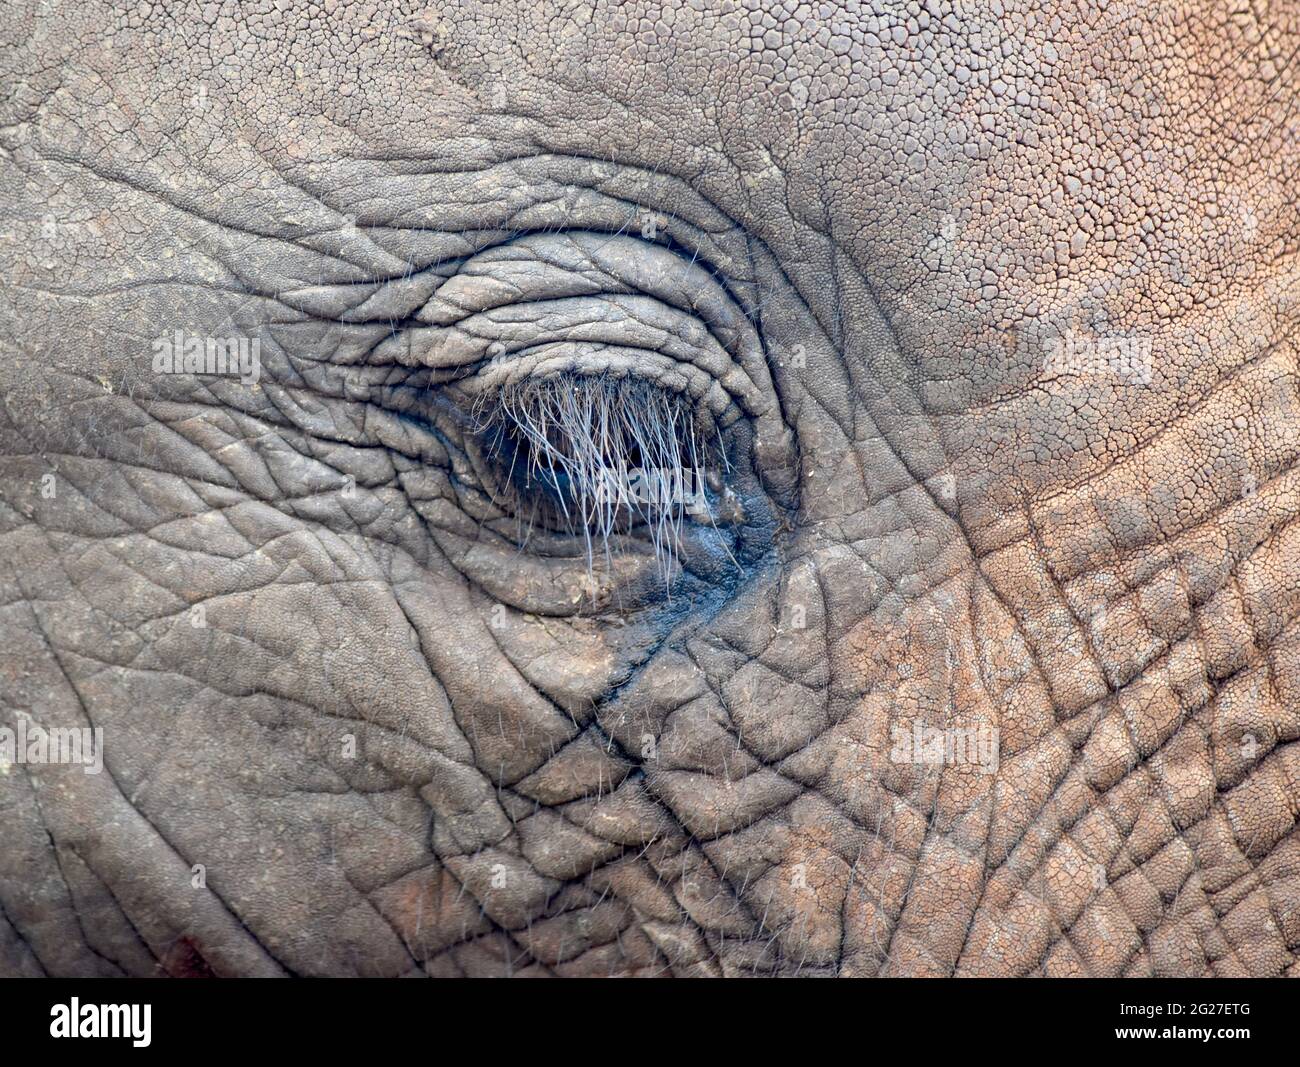 `Elephant eye with long lashes of a baby African elephant (Loxodonta africana). Closeup. Nairobi National Park, Kenya. Stock Photo